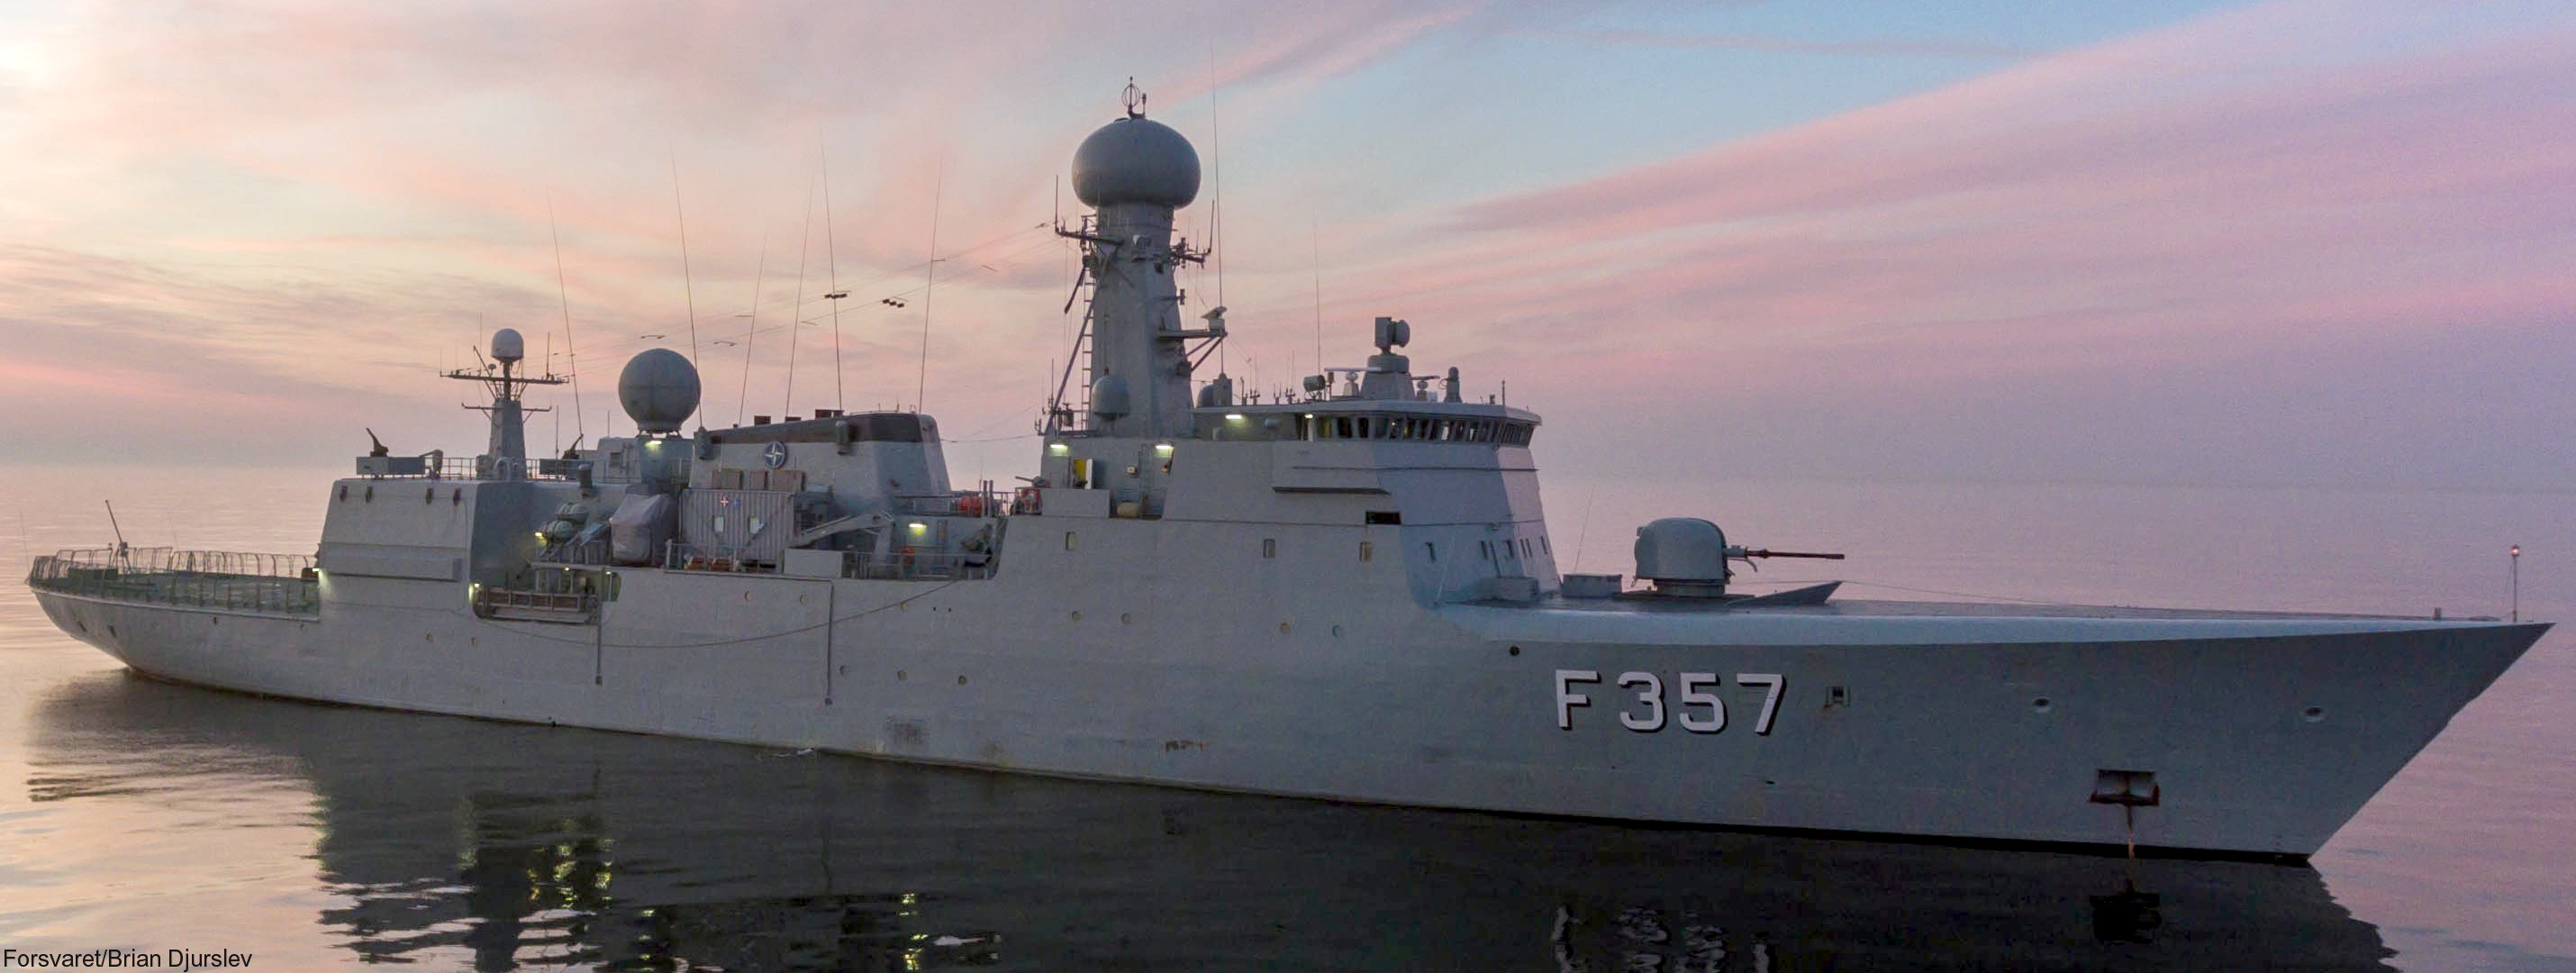 f-357 hdms thetis ocean patrol frigate royal danish navy kongelige danske marine inspektionsskibet 14